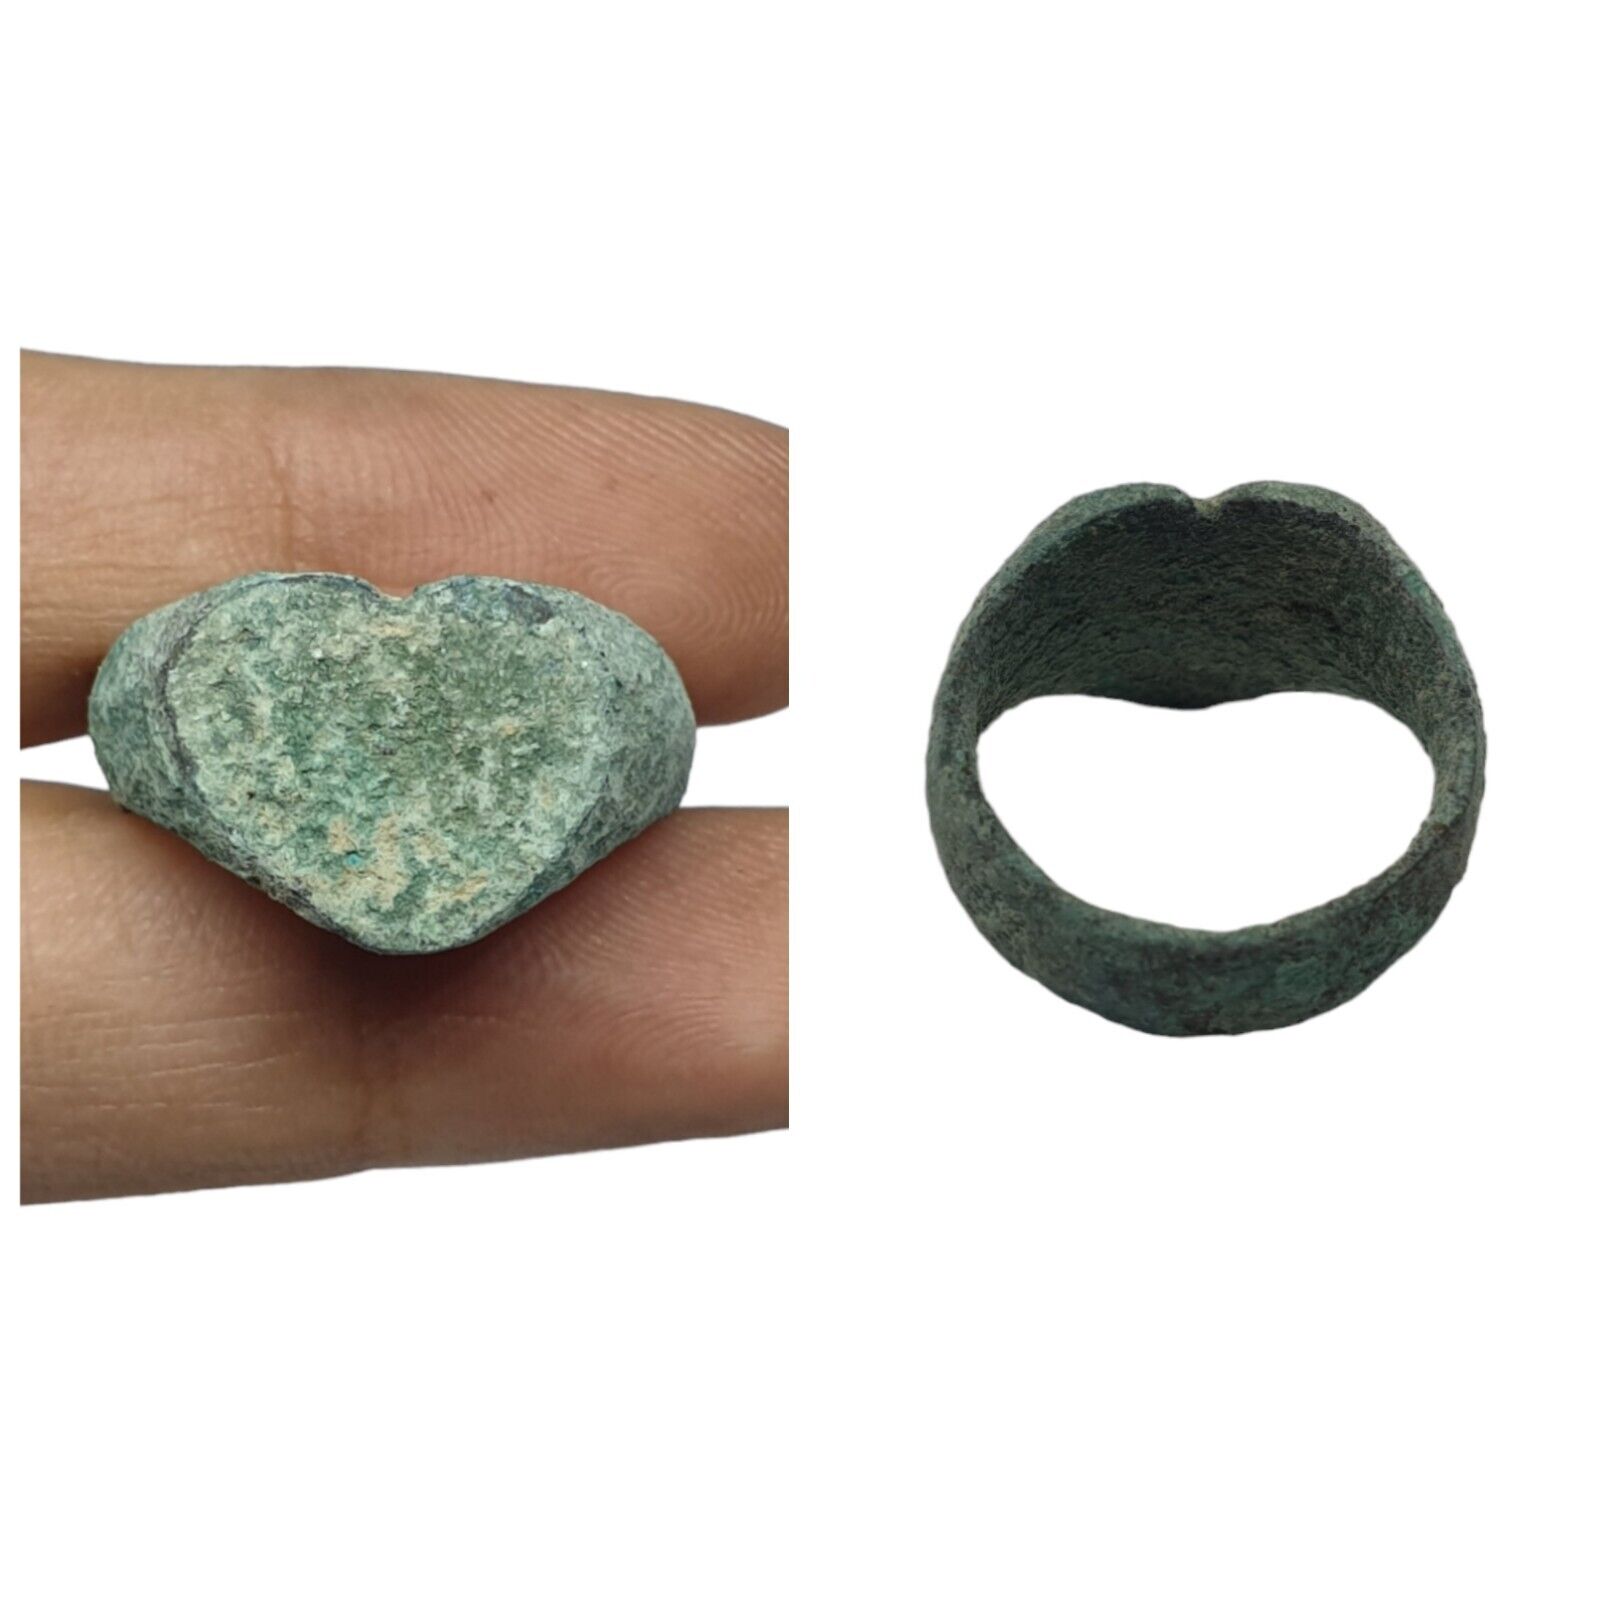 Rare Antique Bronze Medieval Signet Intaglio Engraved Heart Ring Size 7.25US